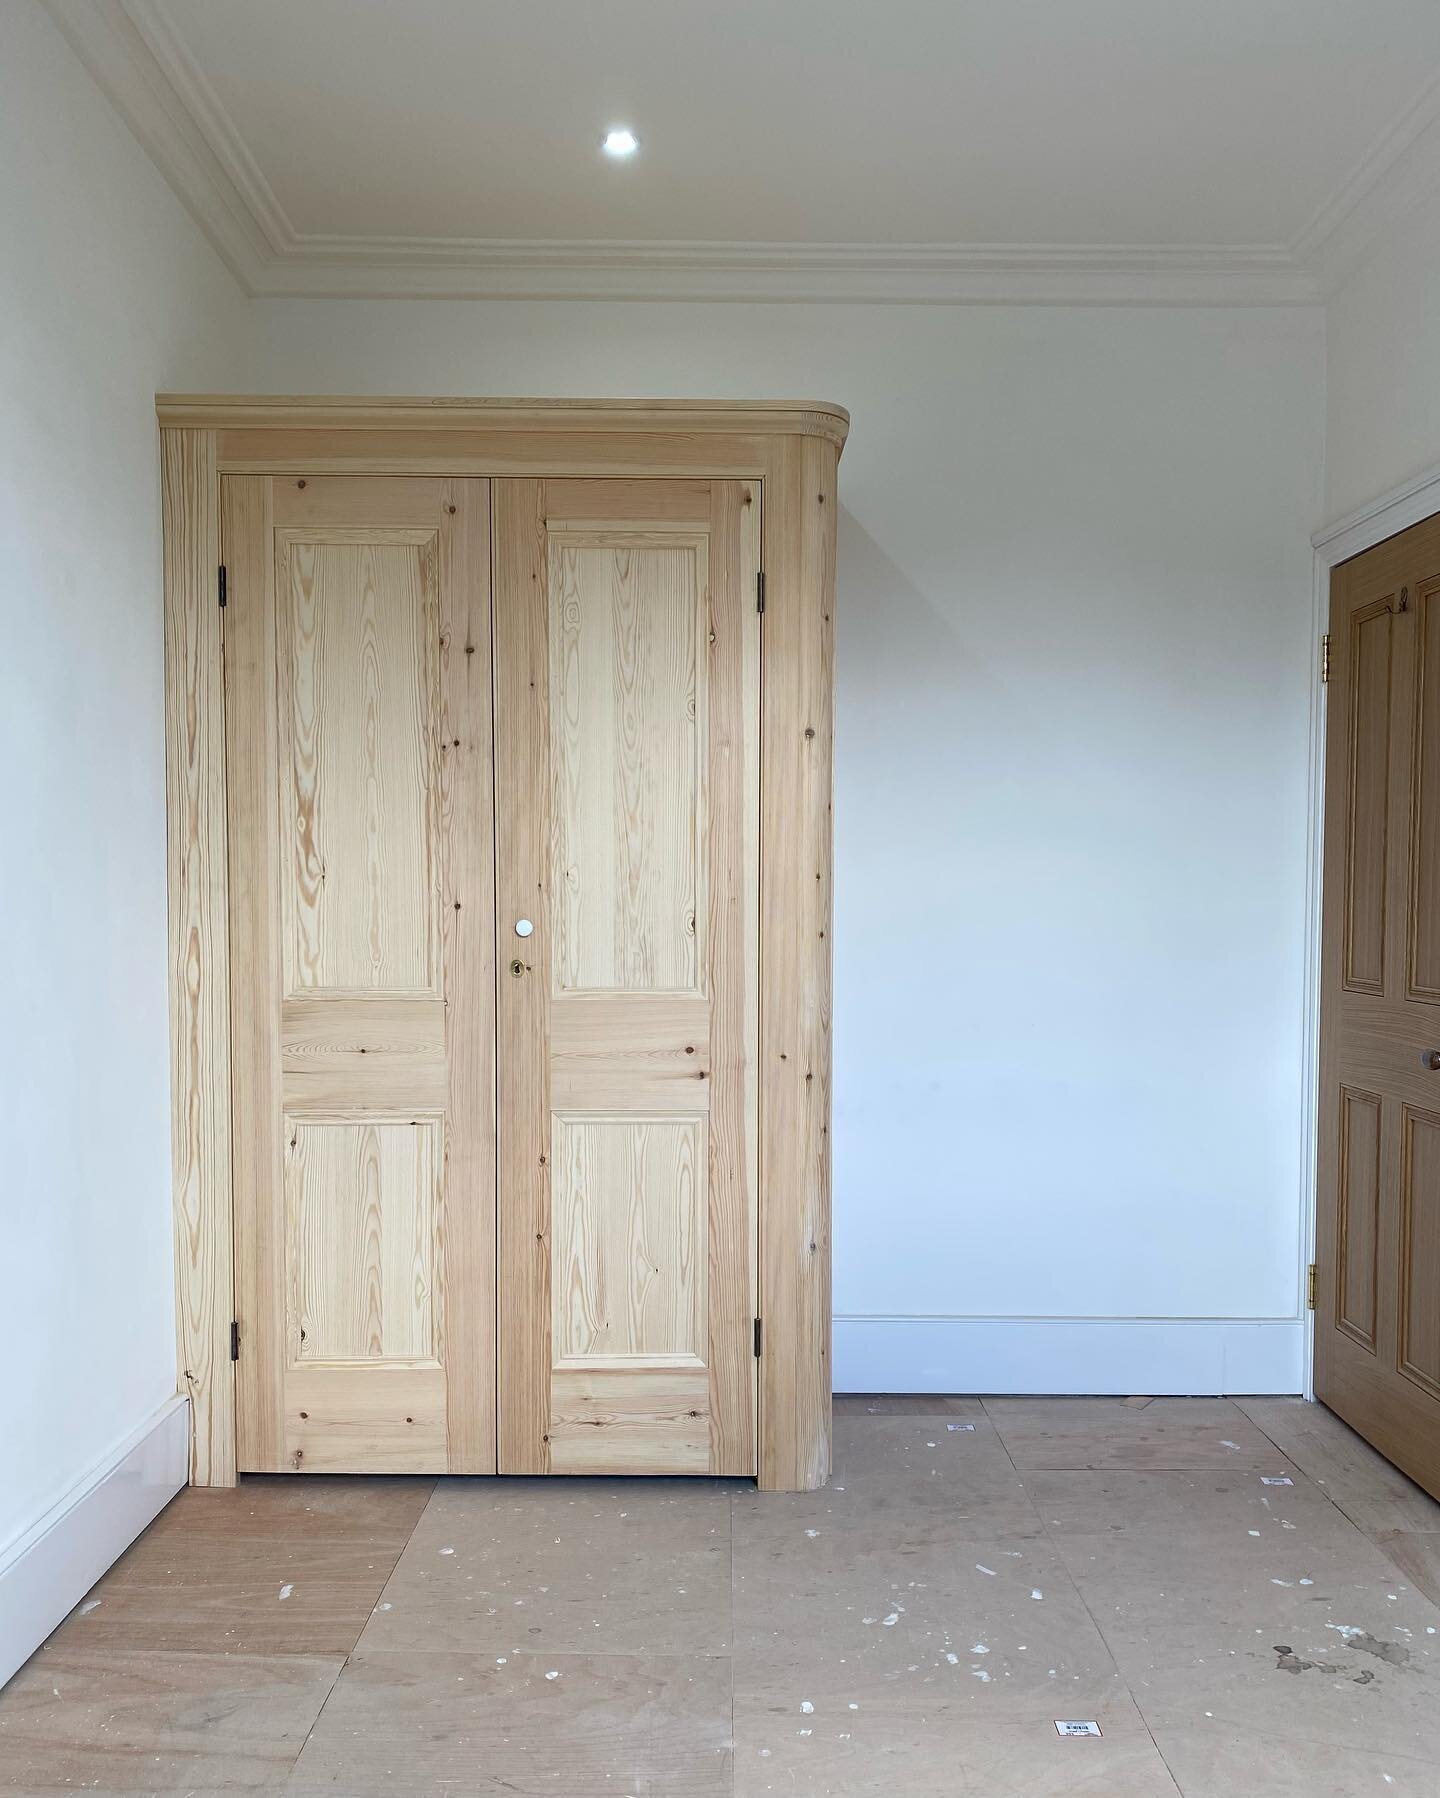 Palladio wardrobe. Awaiting paint. Stroud Green. London. 
The original maker.
&bull;
&bull;
&bull;
#stroudgreen #islington #wardrobe #bedroom #cupboard #interiordesign #home #periodproperty #theoriginalmaker